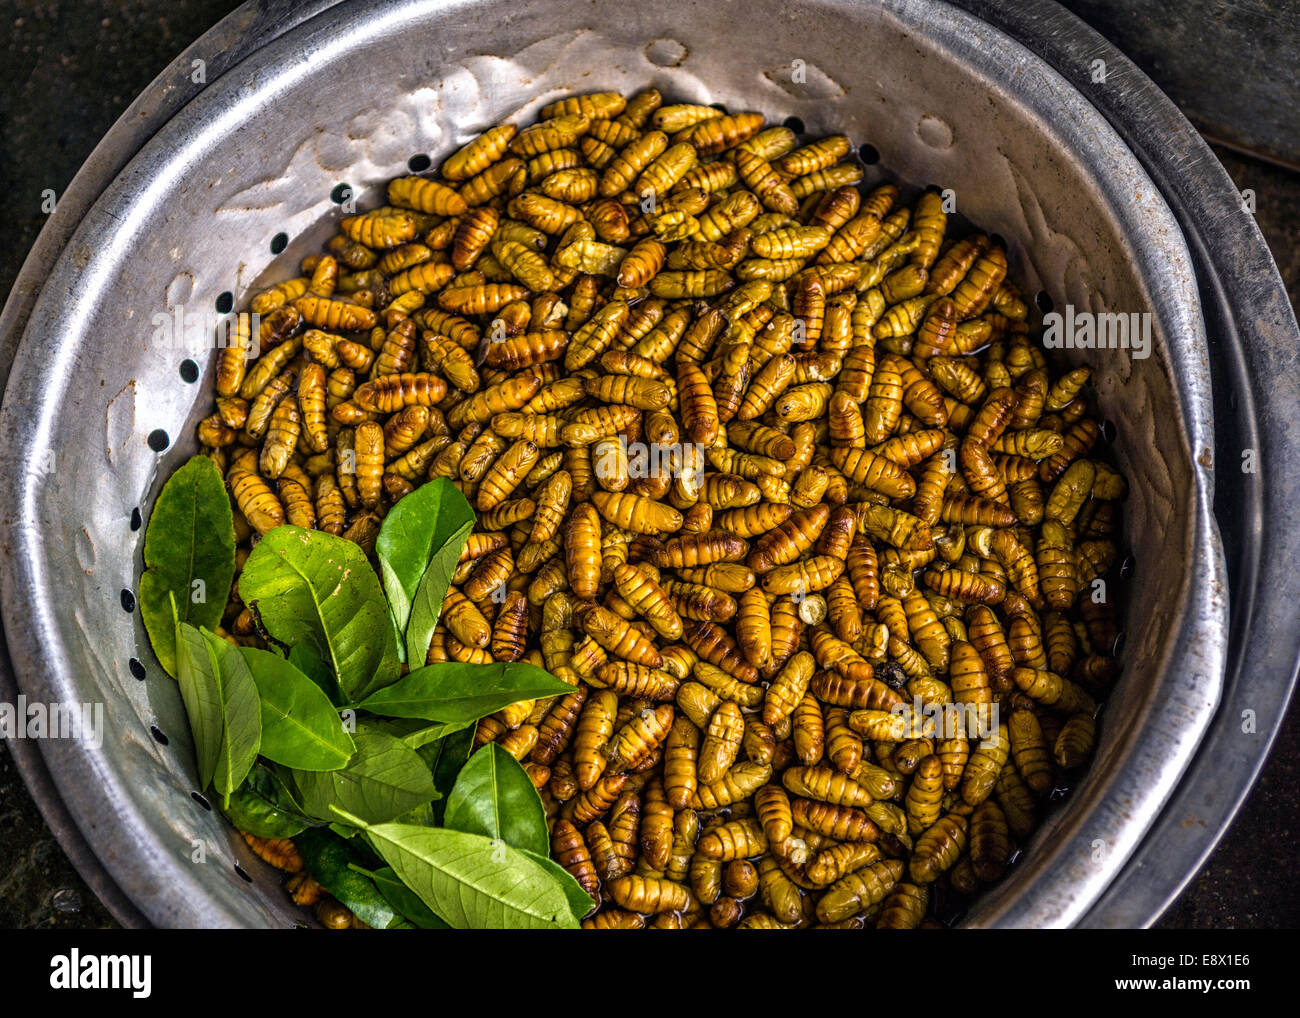 Vietnam Sa Pa: Basin filled with brown yellow maggots on market